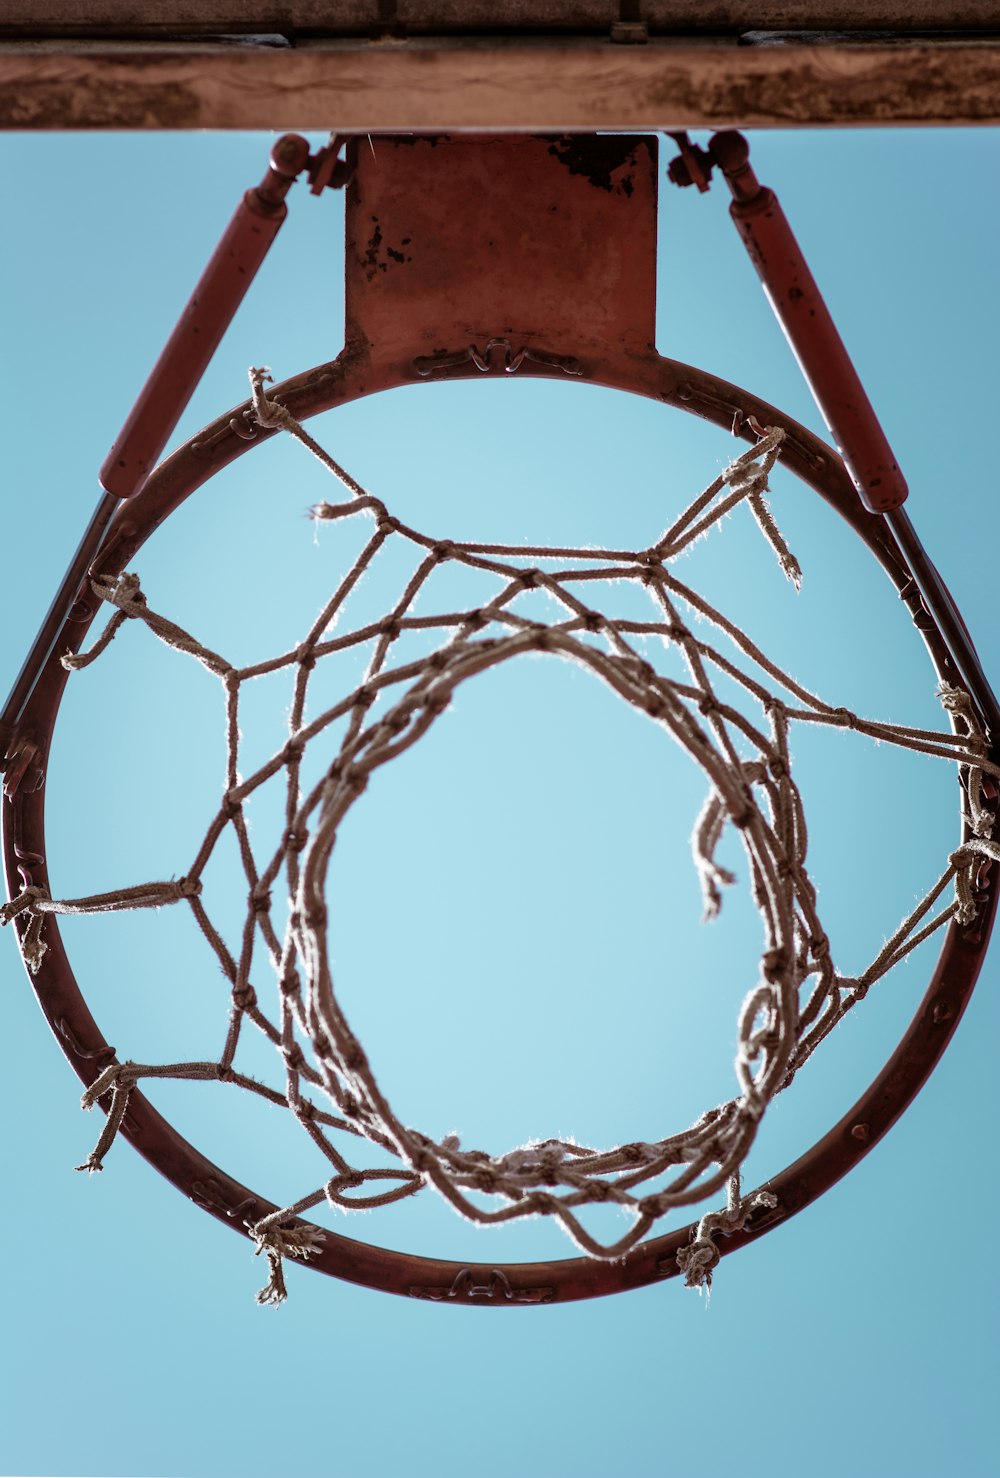 brown metal basketball rim under blue sky